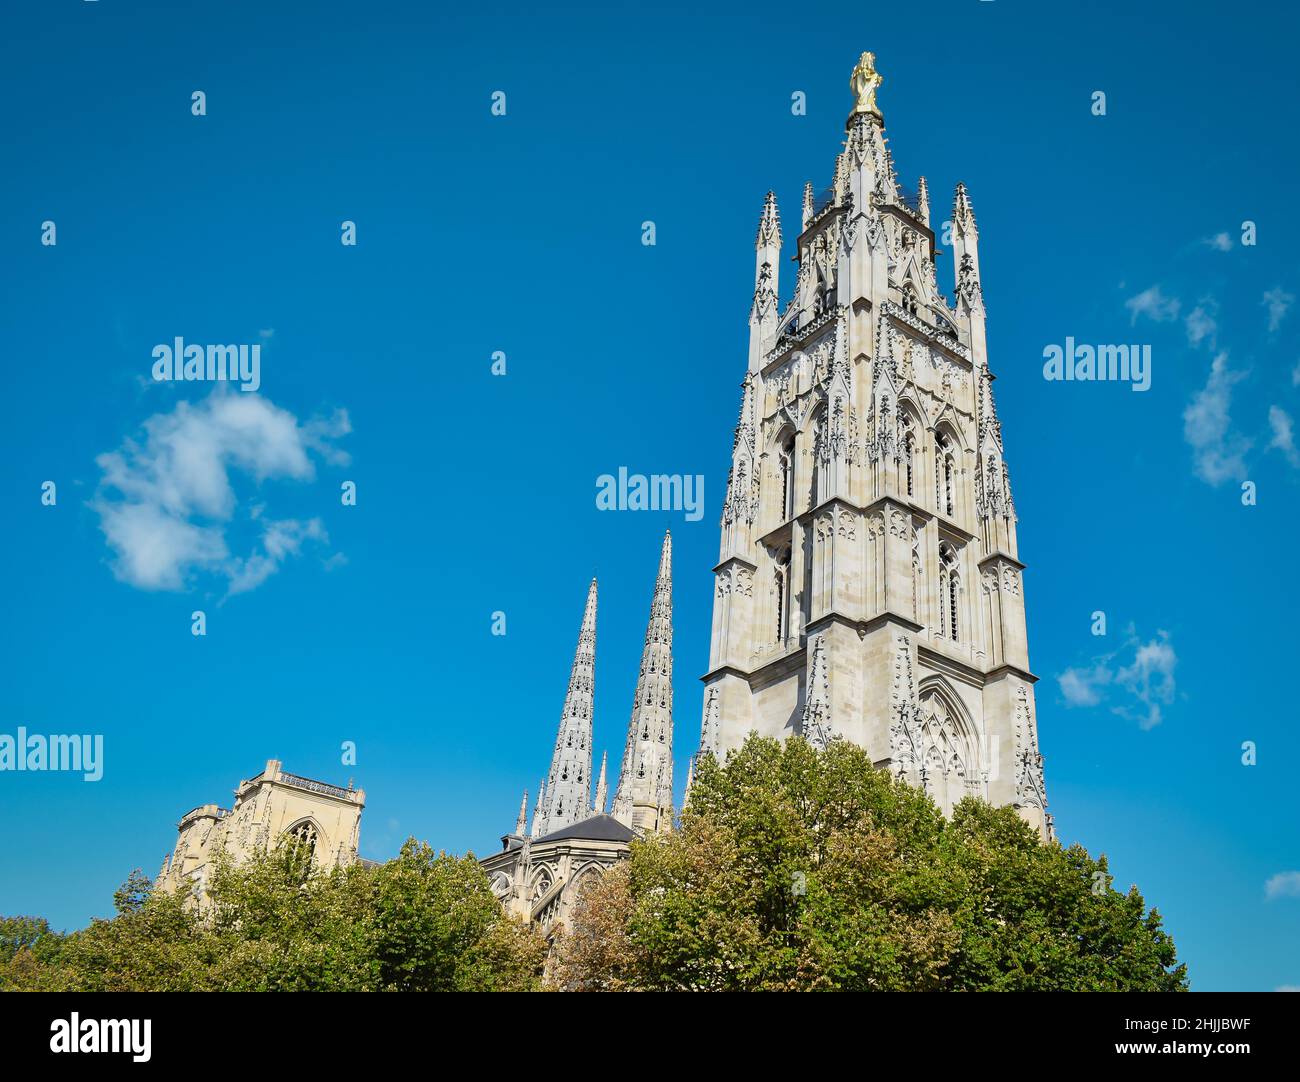 Alte Kathedrale von Bordeaux Turm gegen den blauen Himmel Stockfoto